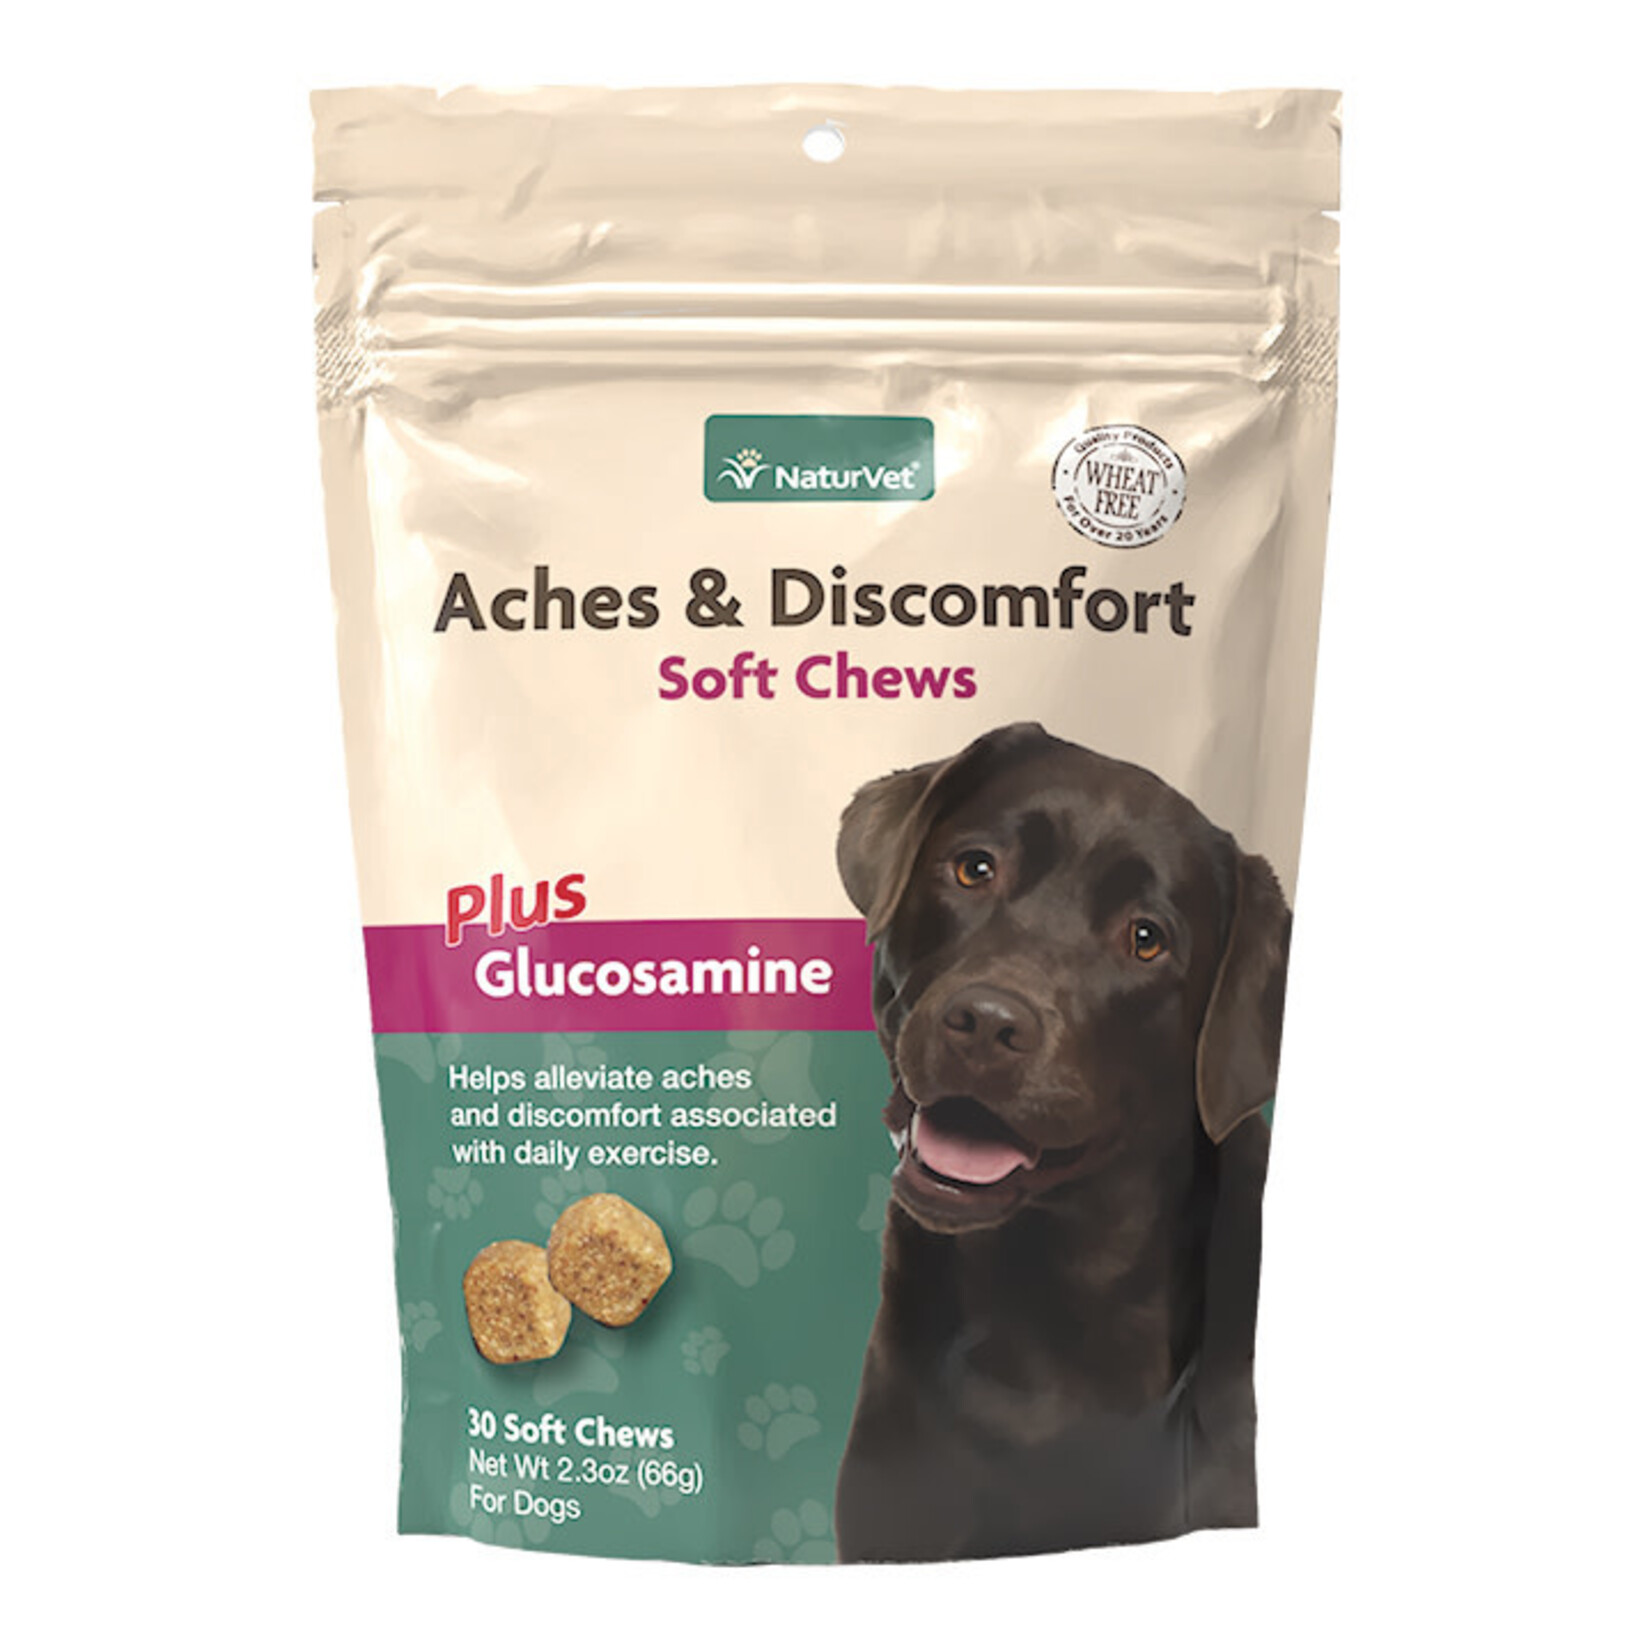 NaturVet Aches & Discomfort Soft Chews Plus Glucosamine